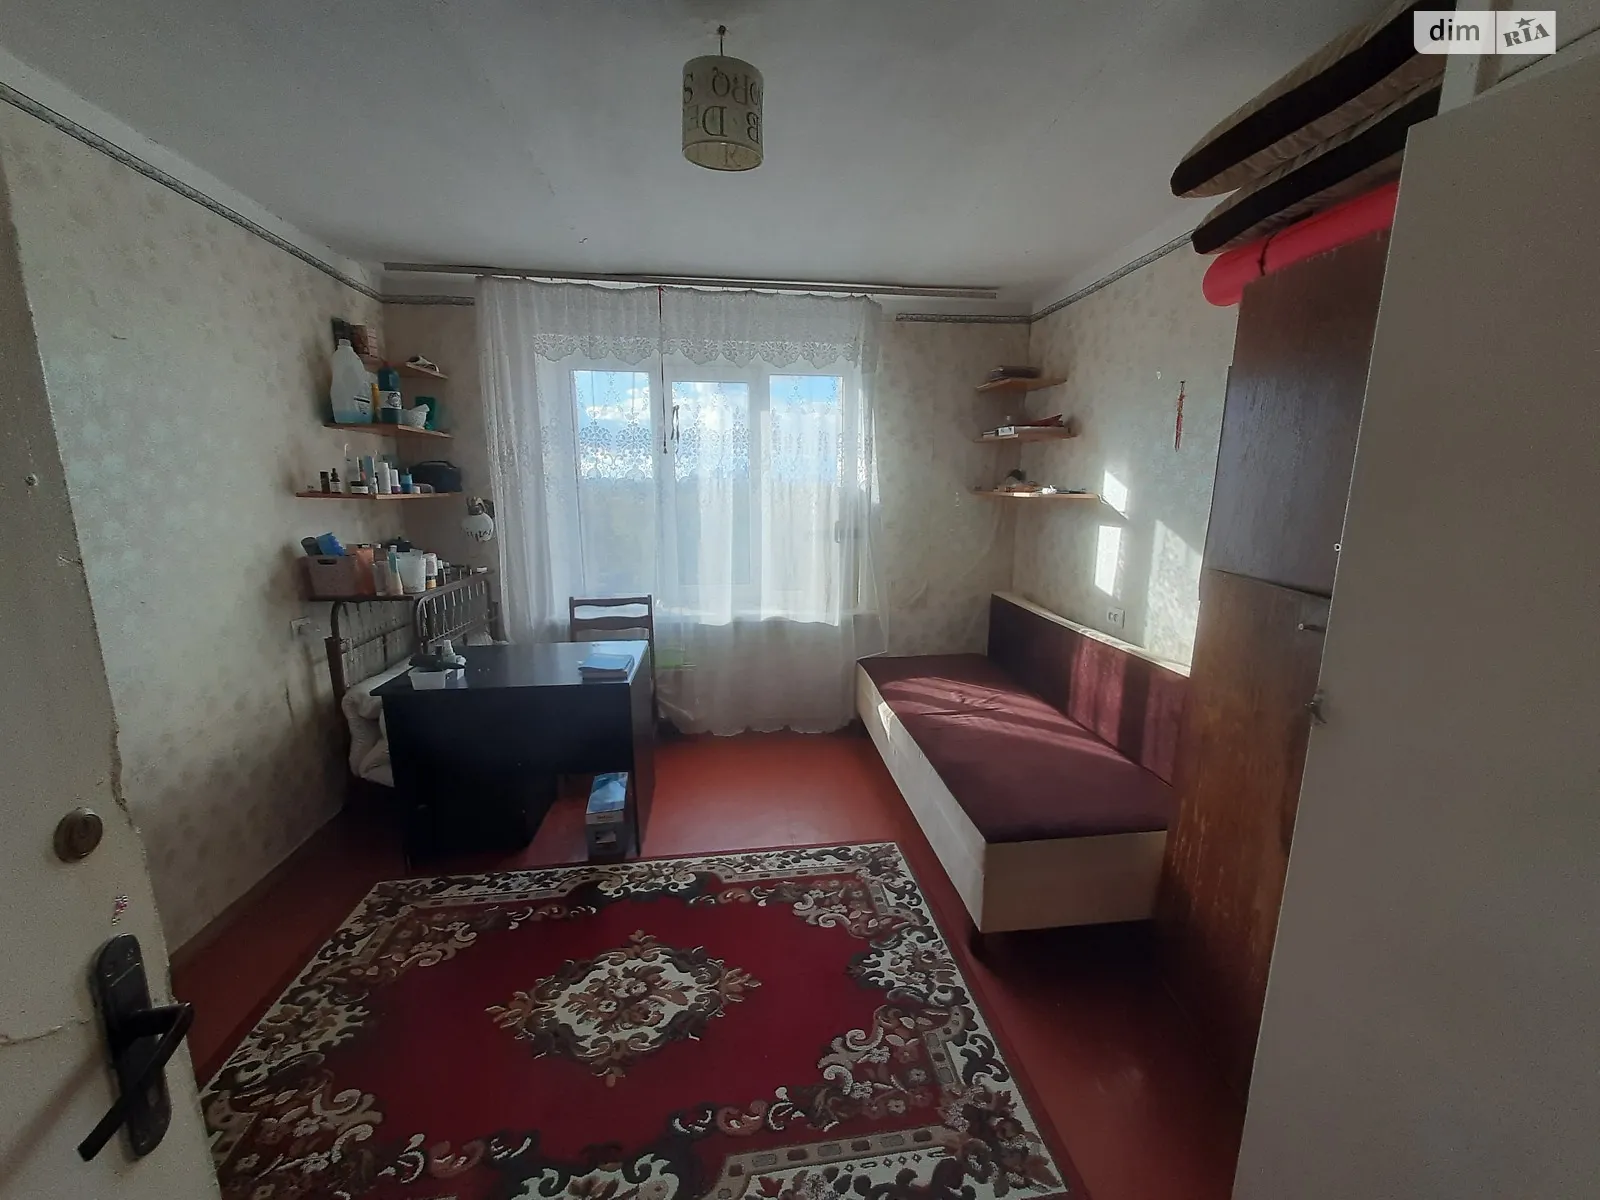 Продается комната 21 кв. м в Киеве, цена: 13000 $ - фото 1